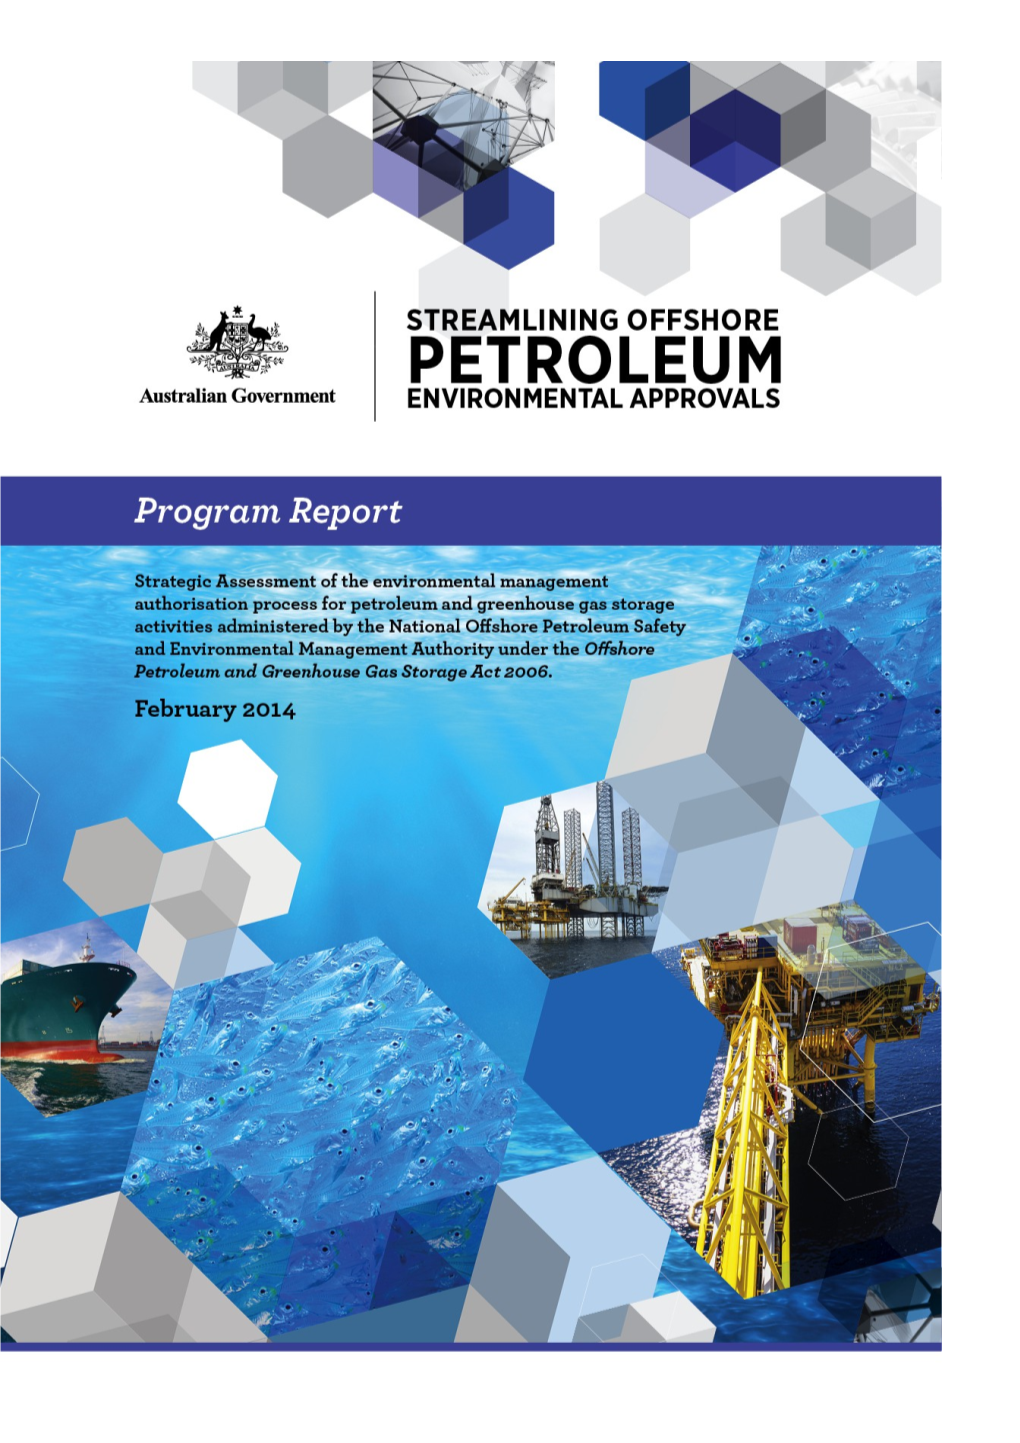 Streamlining Offshore Petroleum Environmental Approvals - Program Report